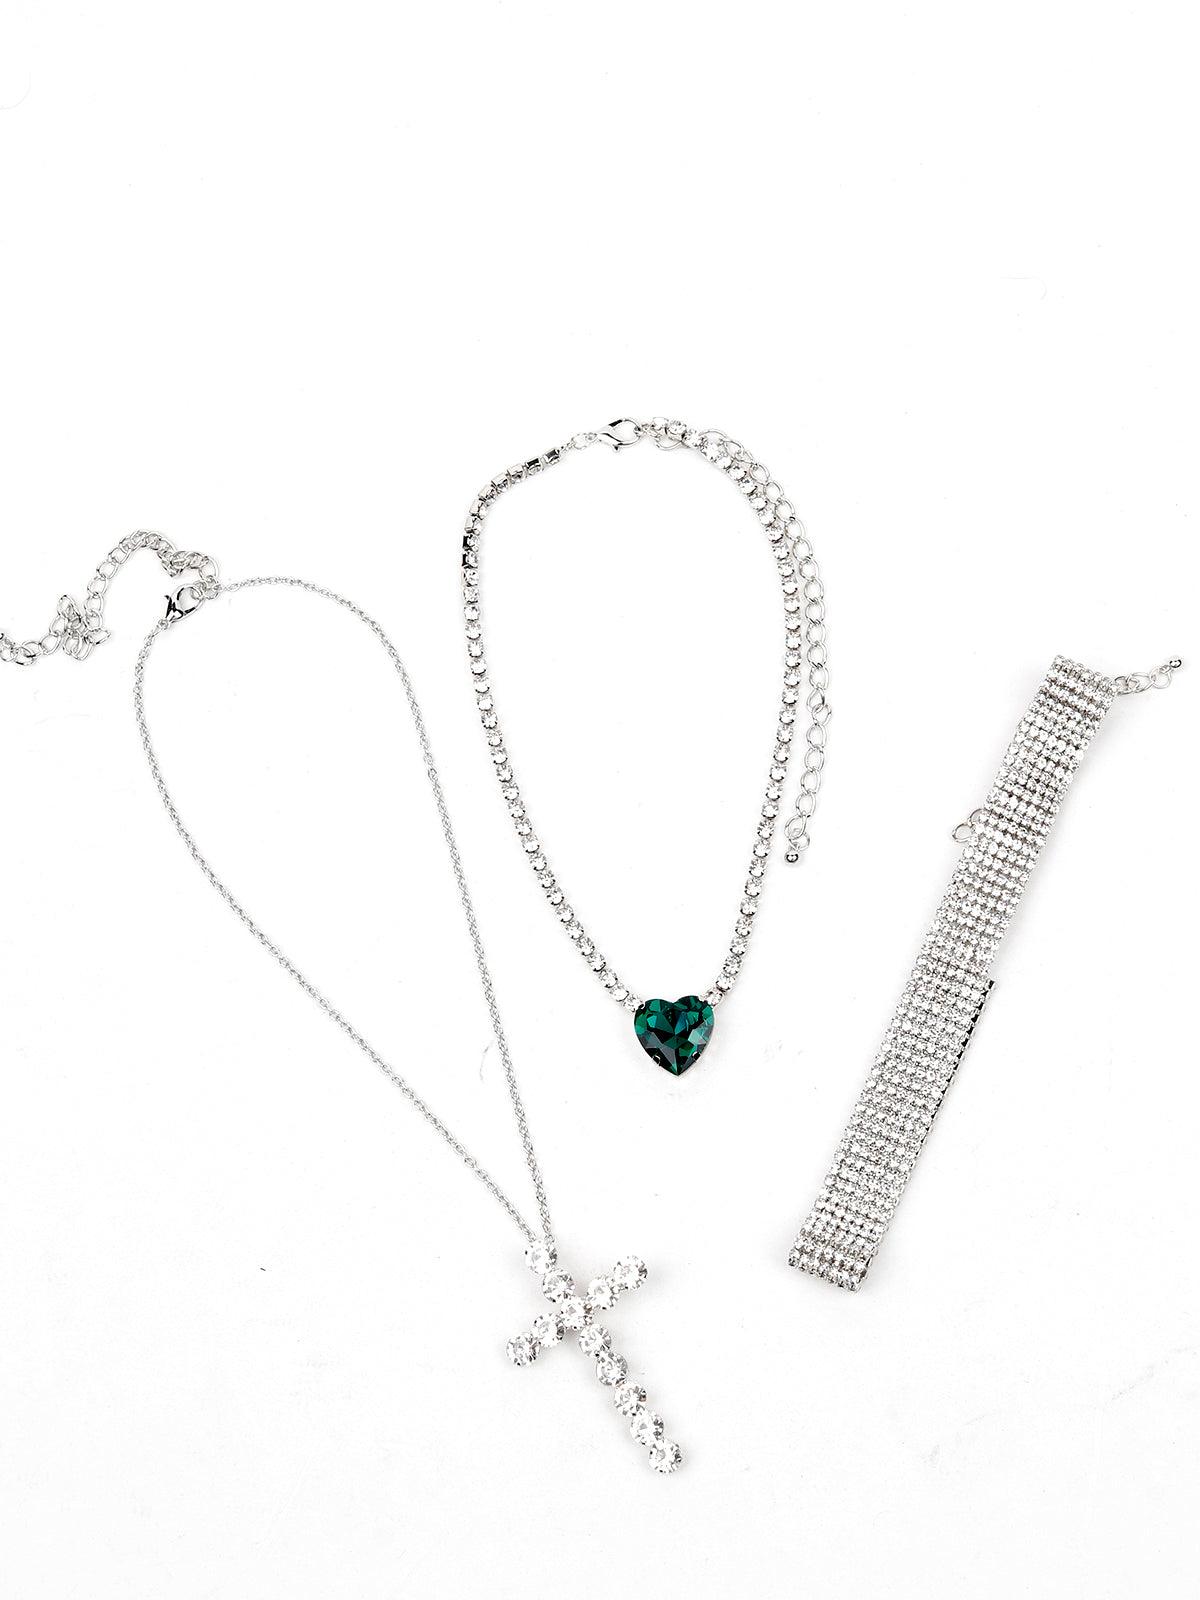 Fully studded crystal statement three piece necklace set - Odette